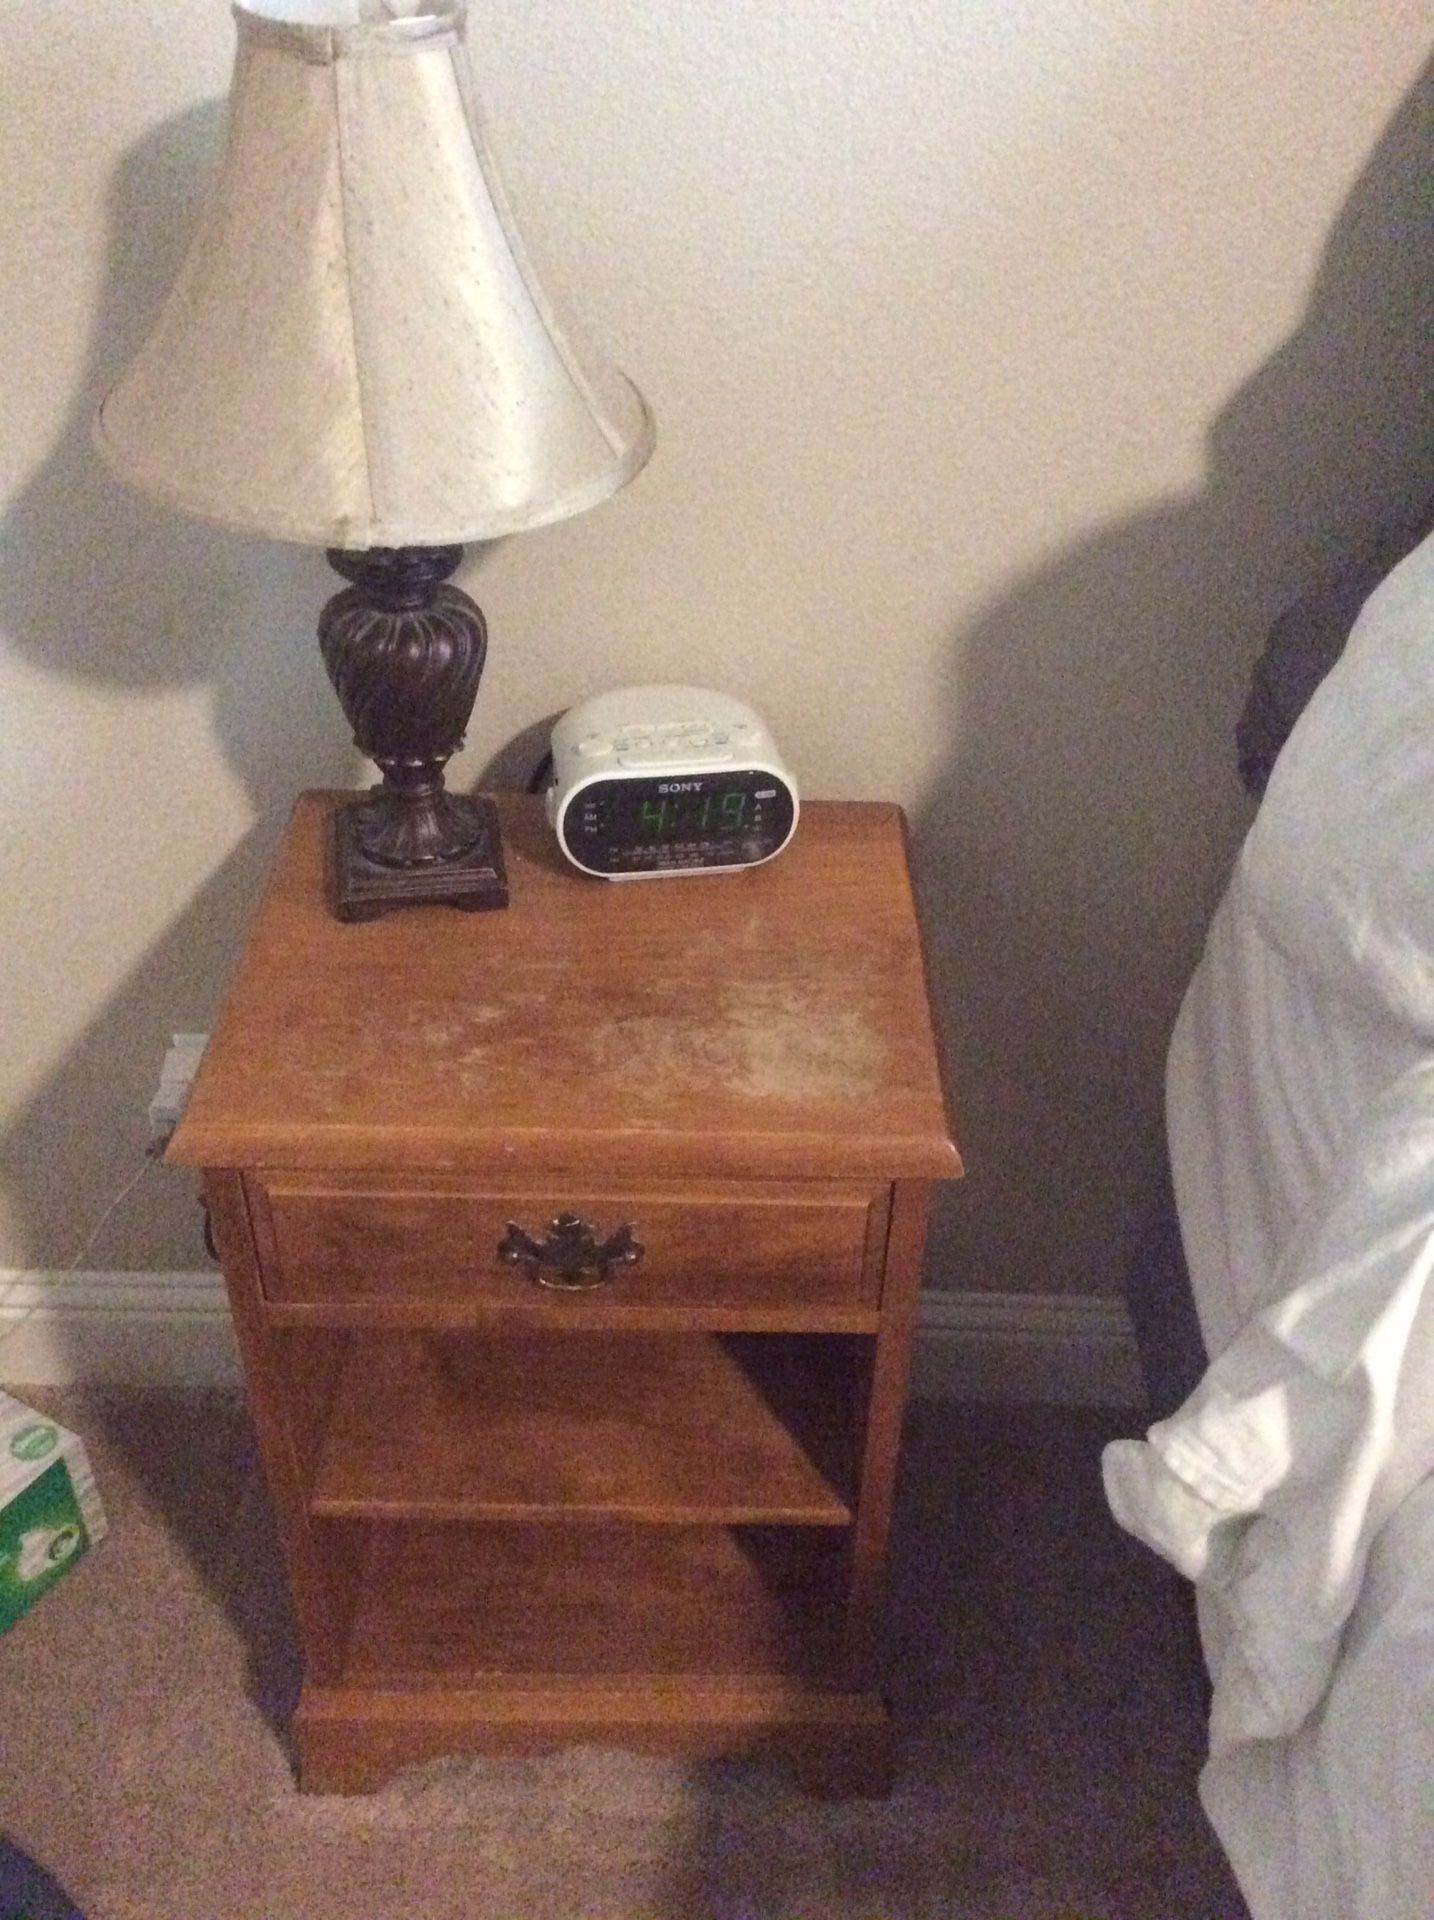 nightstands, lamps, and alarm clocks